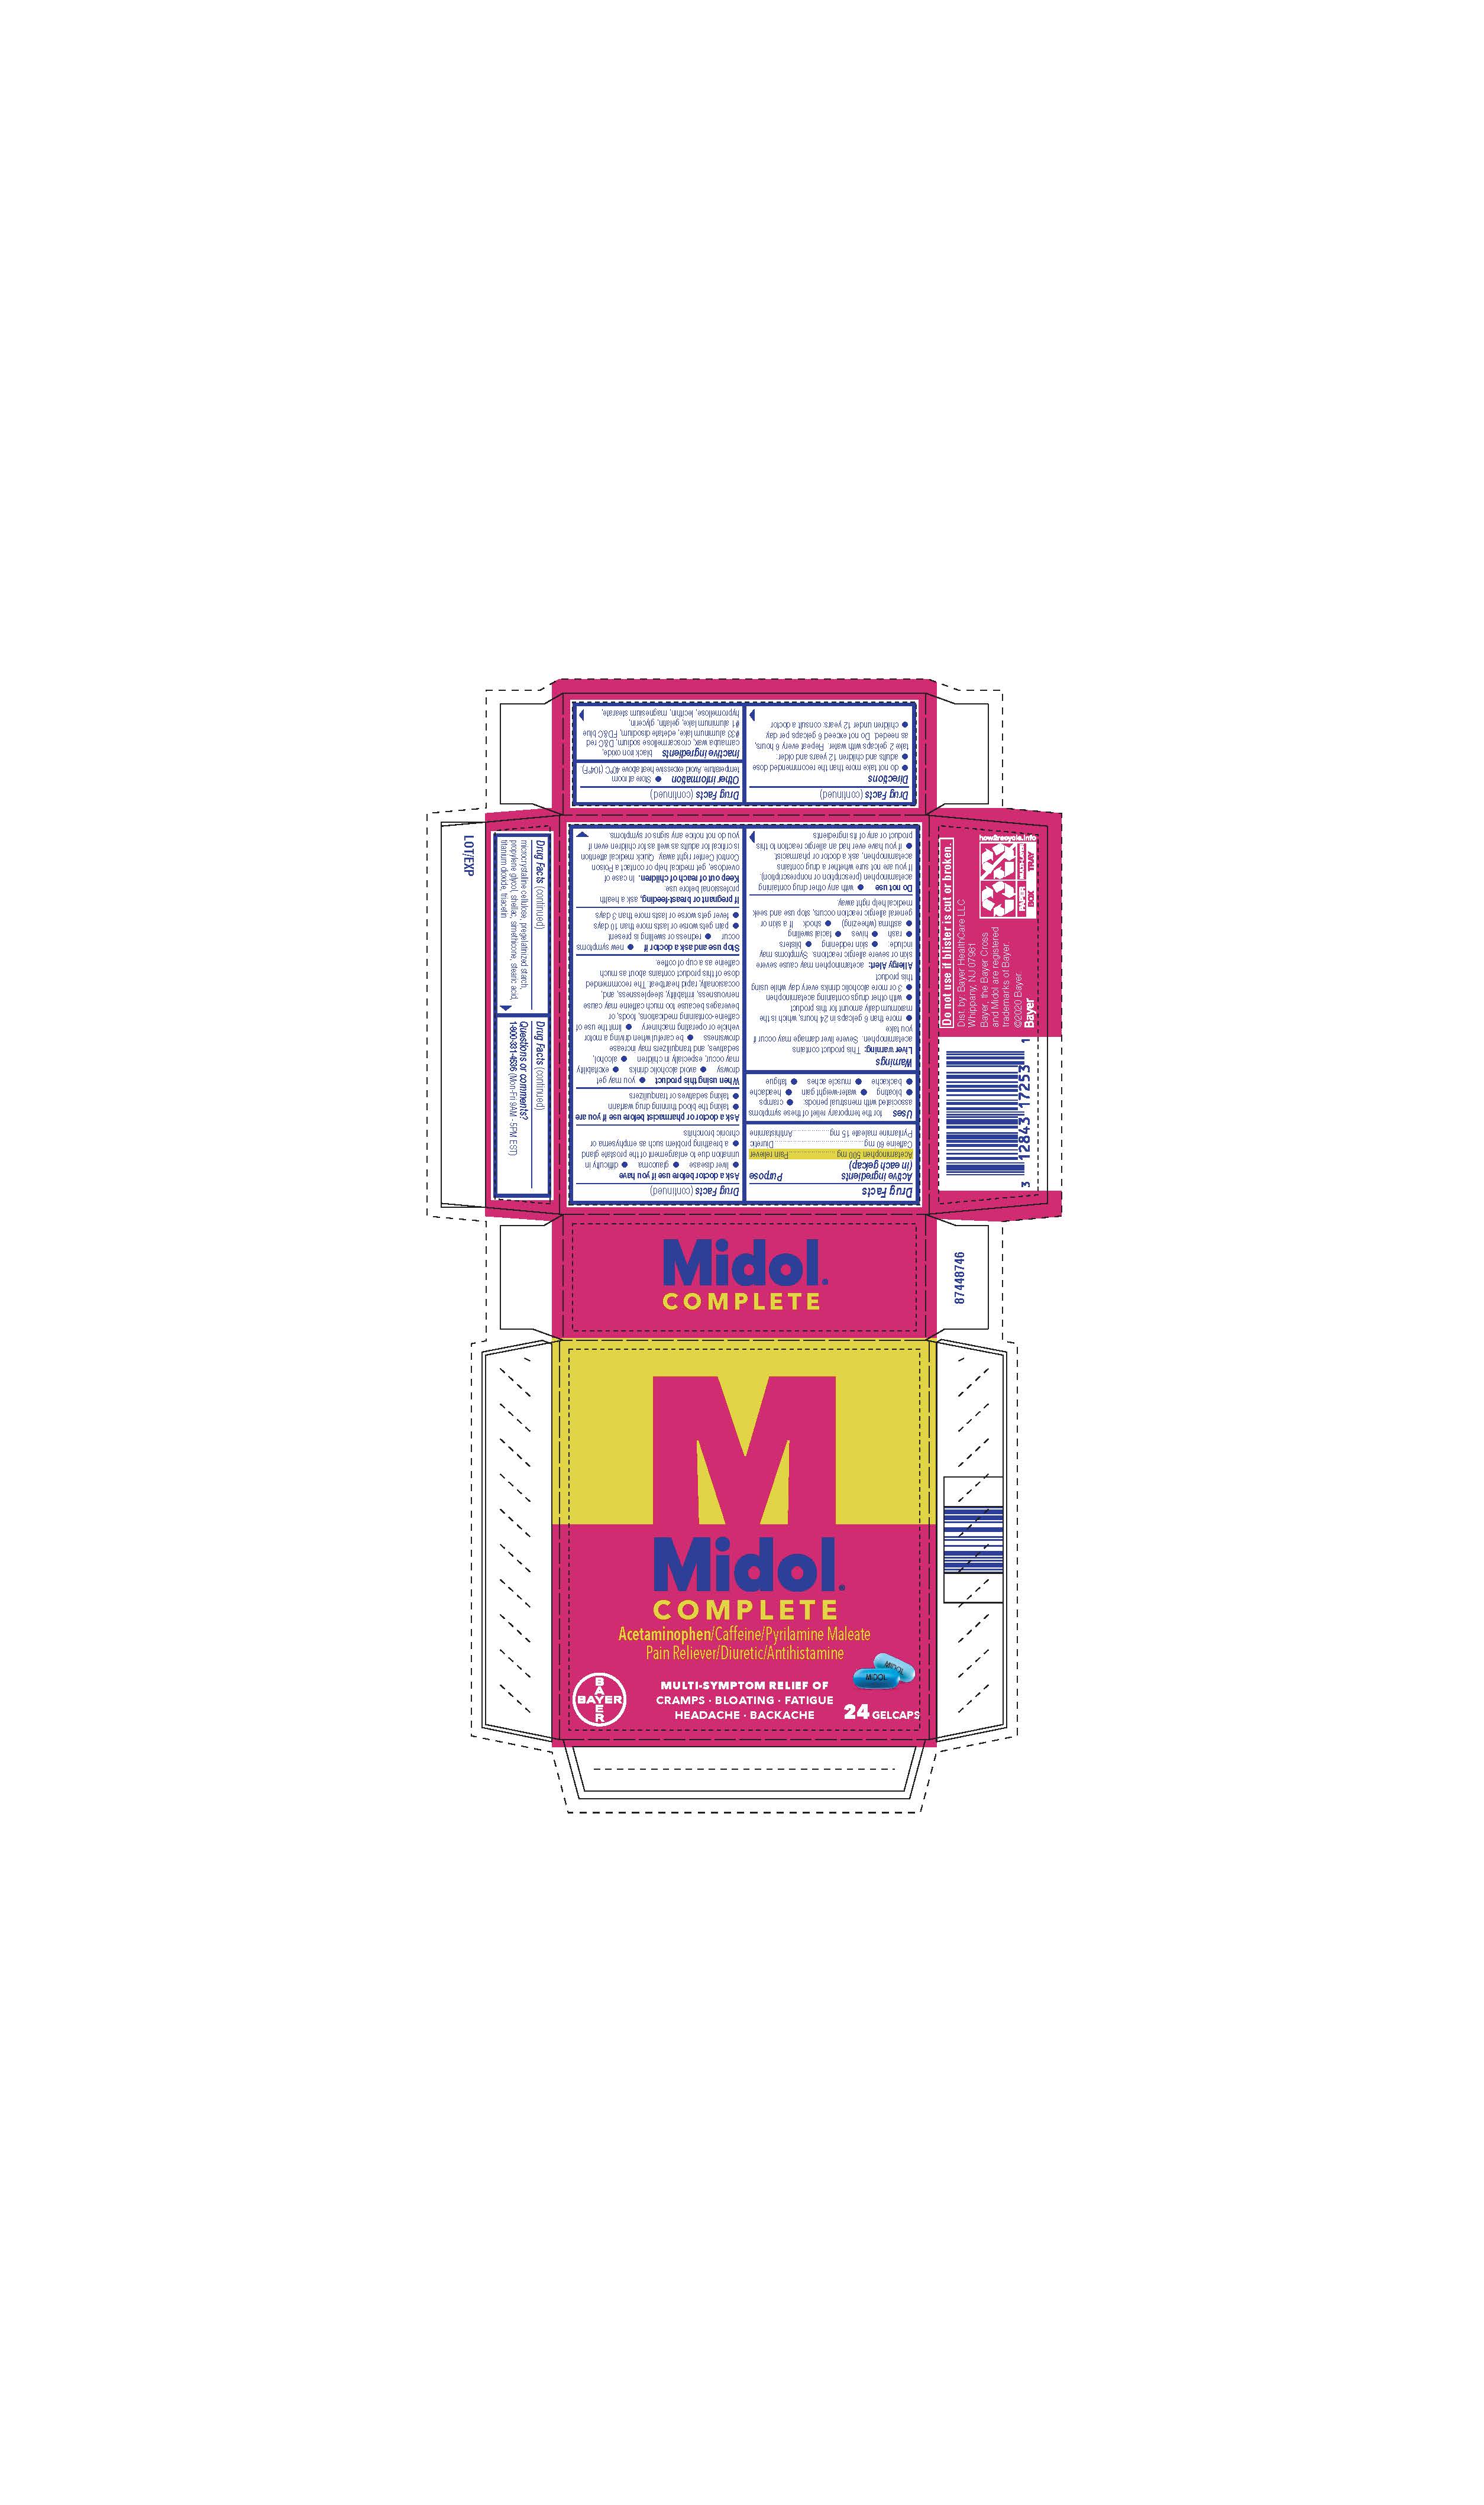 Midol Complete Gelcaps 24ct Carton